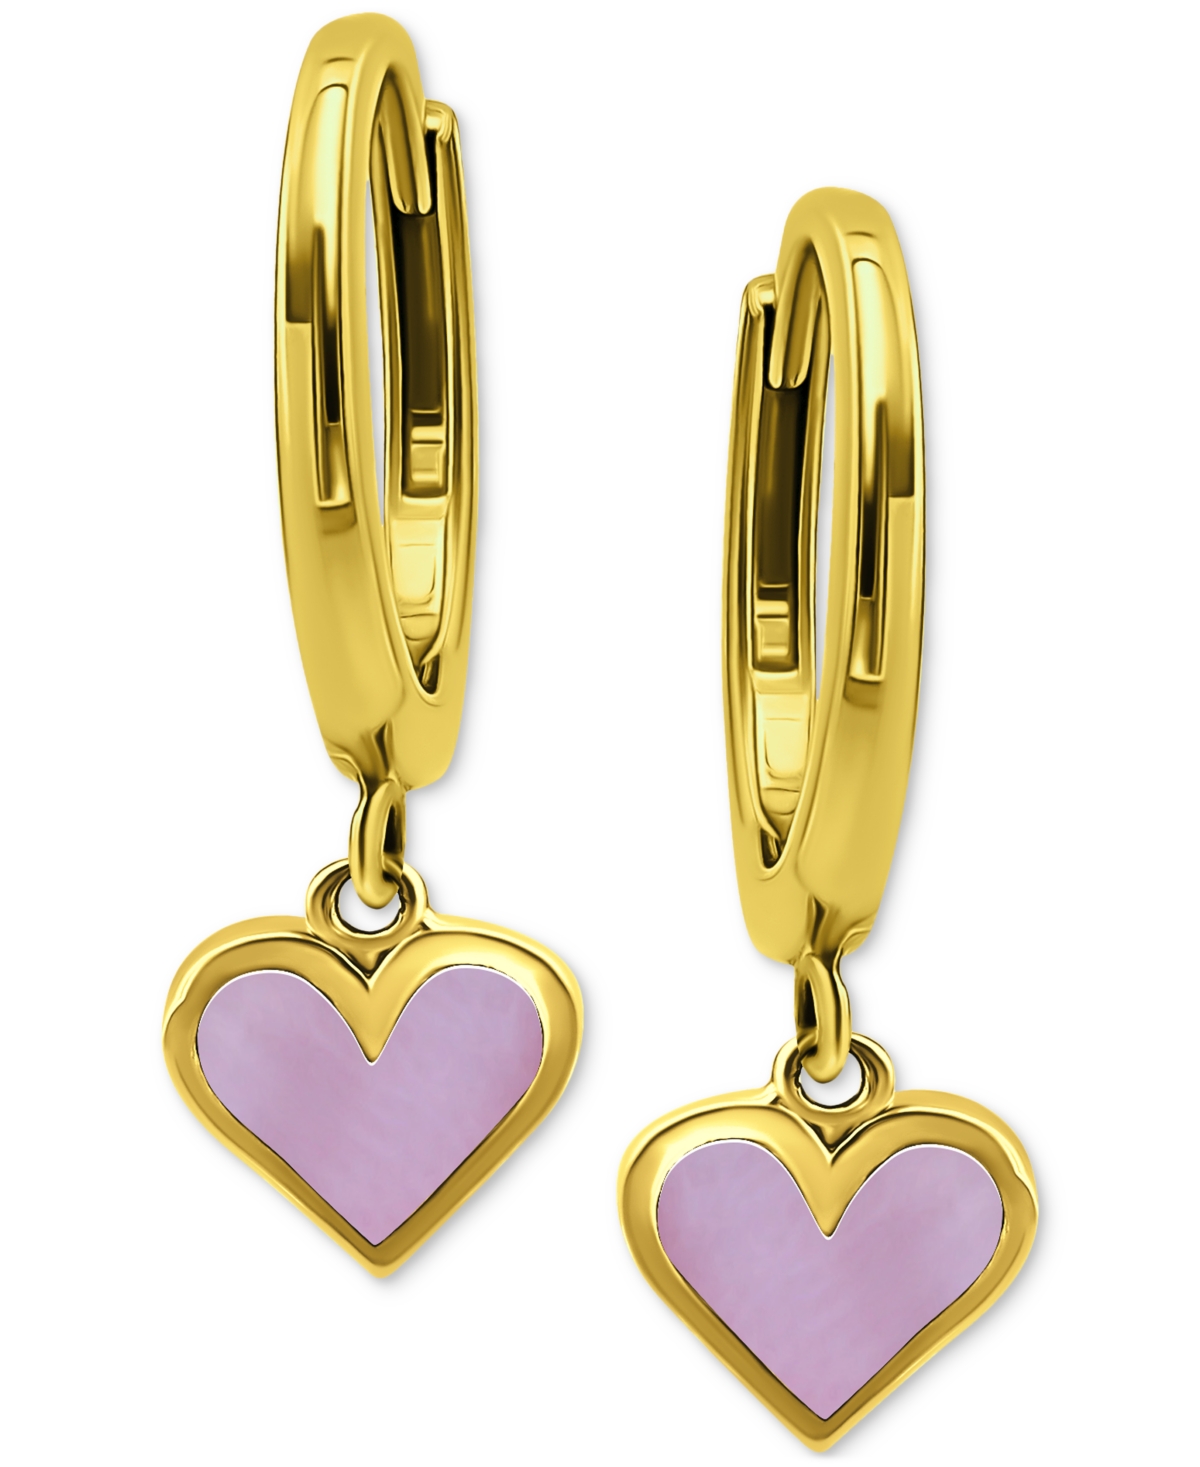 Giani Bernini Pink Shell Heart Dangle Hoop Drop Earrings In 18k Gold-plated Sterling Silver, Created For Macy's